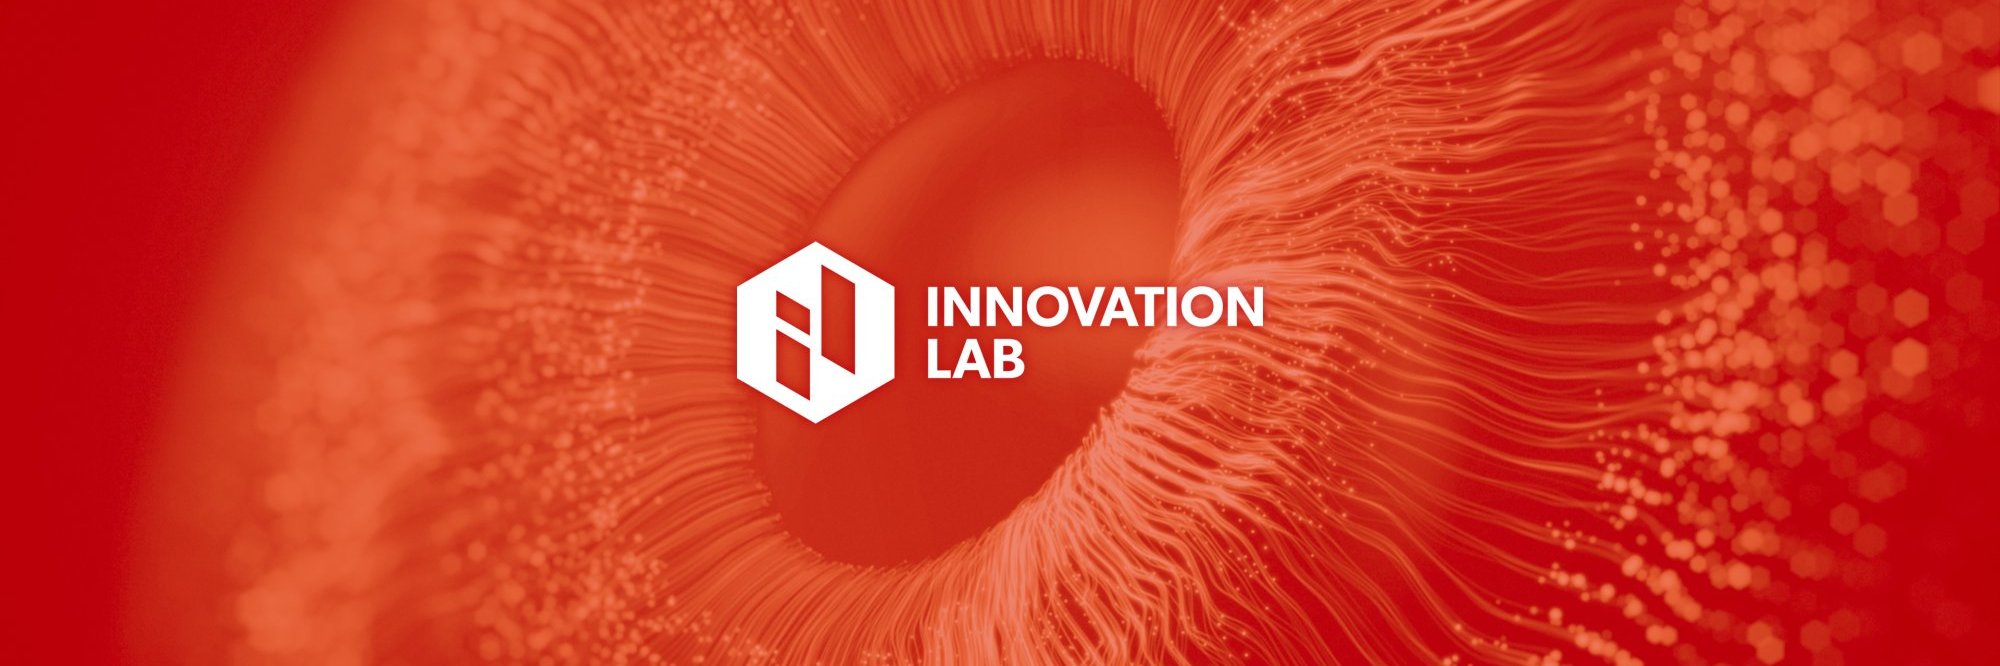 ITCILO Innovation Lab